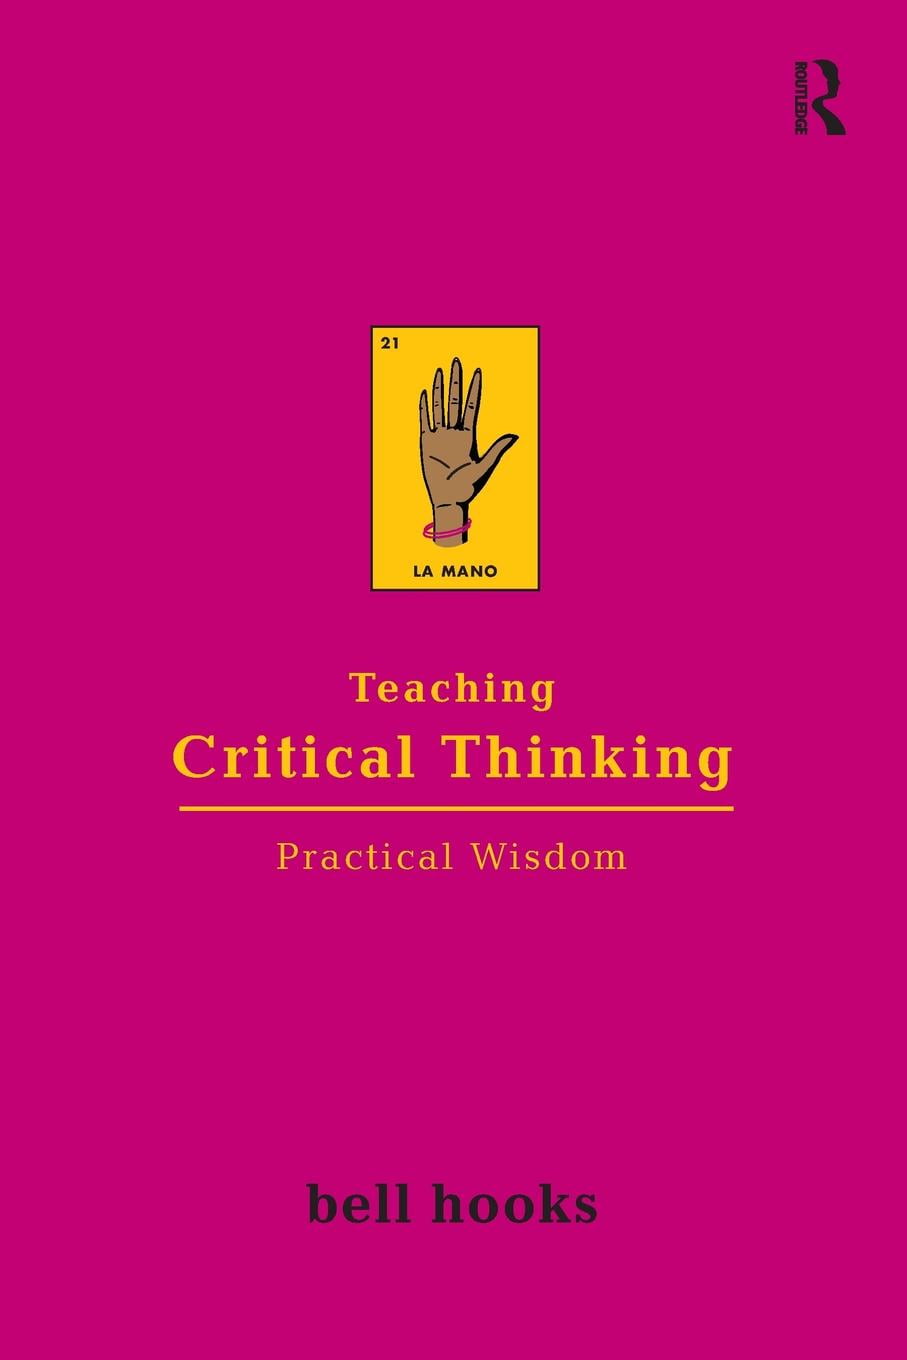 bell hooks teaching critical thinking